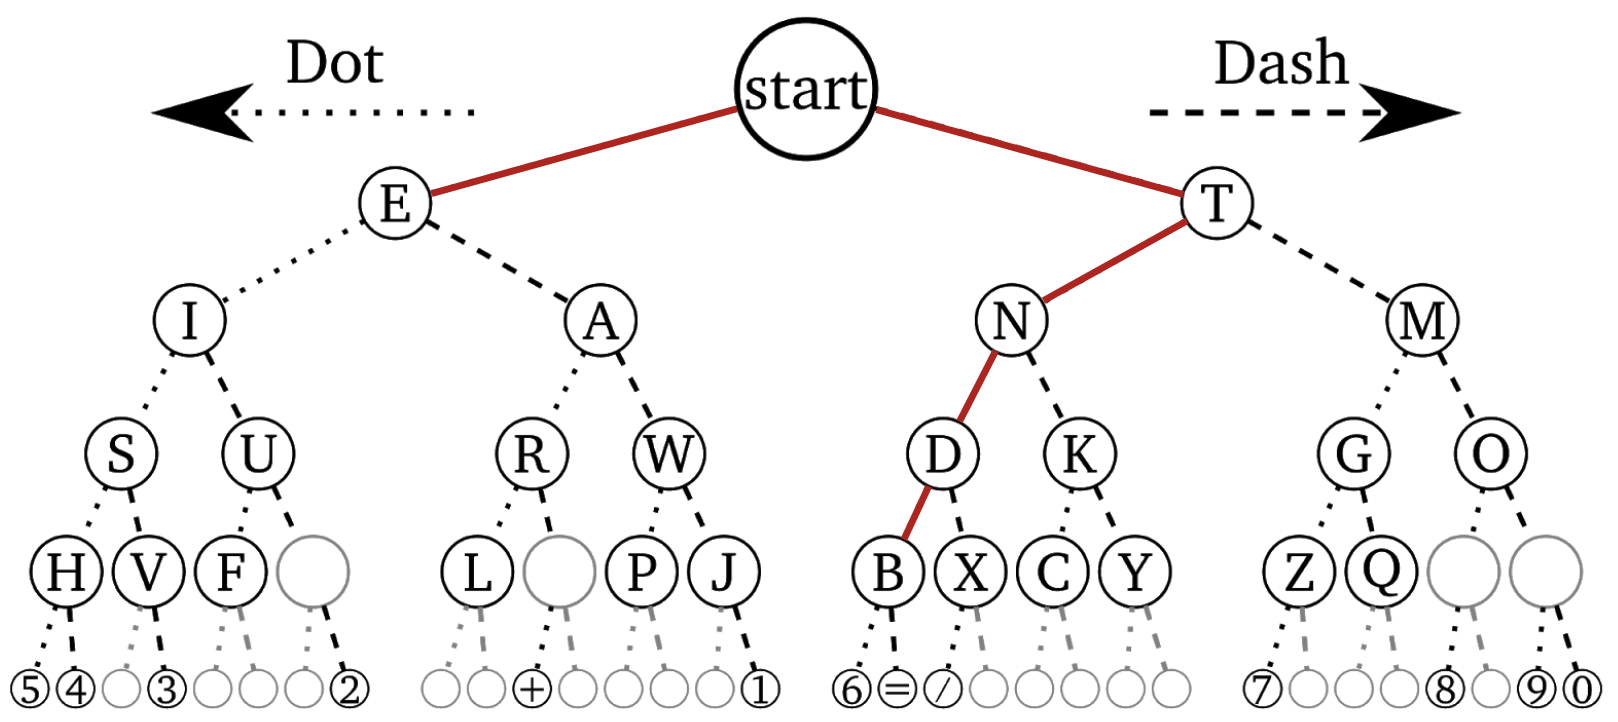 Morse Code Tree